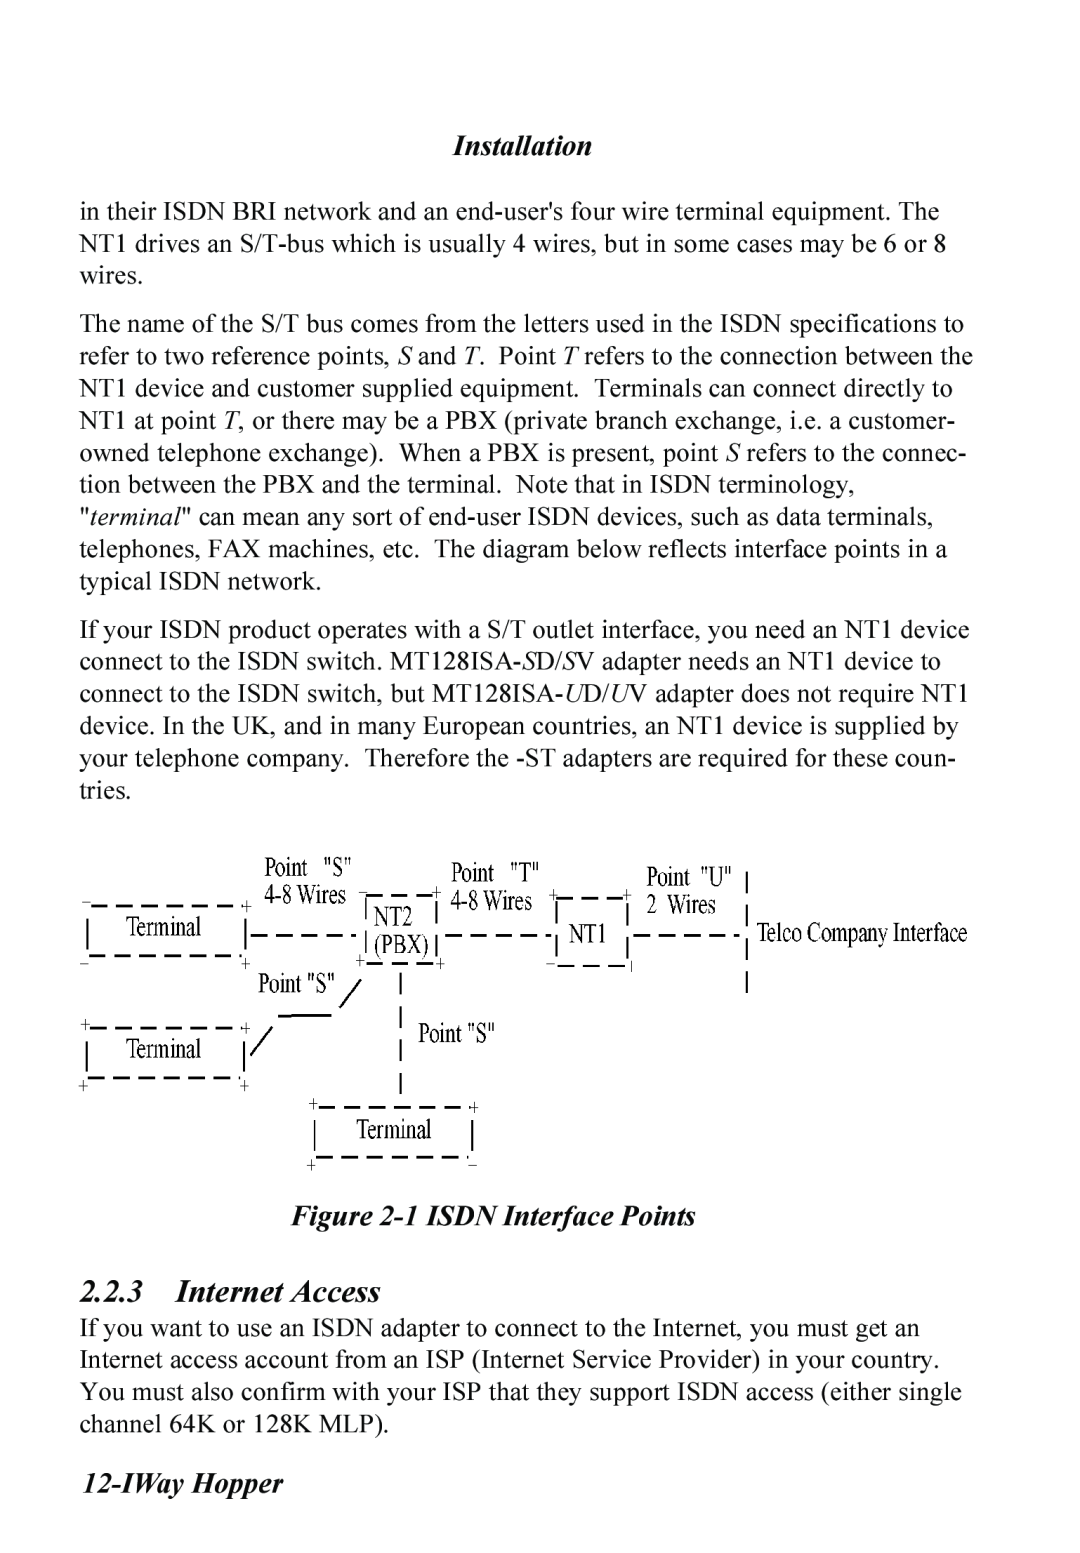 Multitech MT128ISA-SD, MT128ISA-SV, MT128ISA-UV manual Internet Access, 1 ISDN Interface Points, IWay Hopper, Installation 